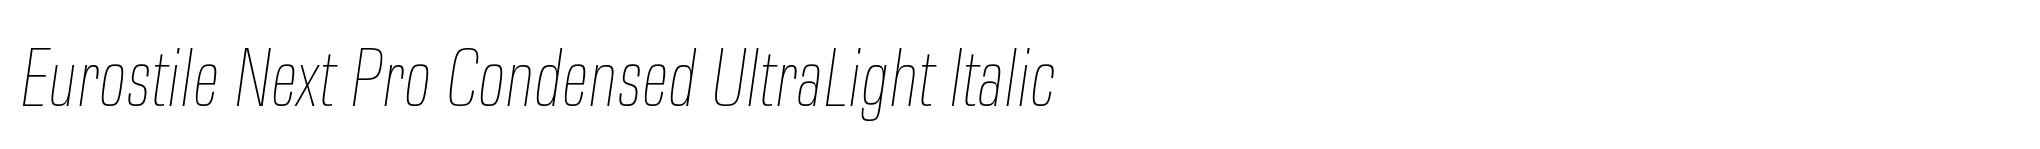 Eurostile Next Pro Condensed UltraLight Italic image